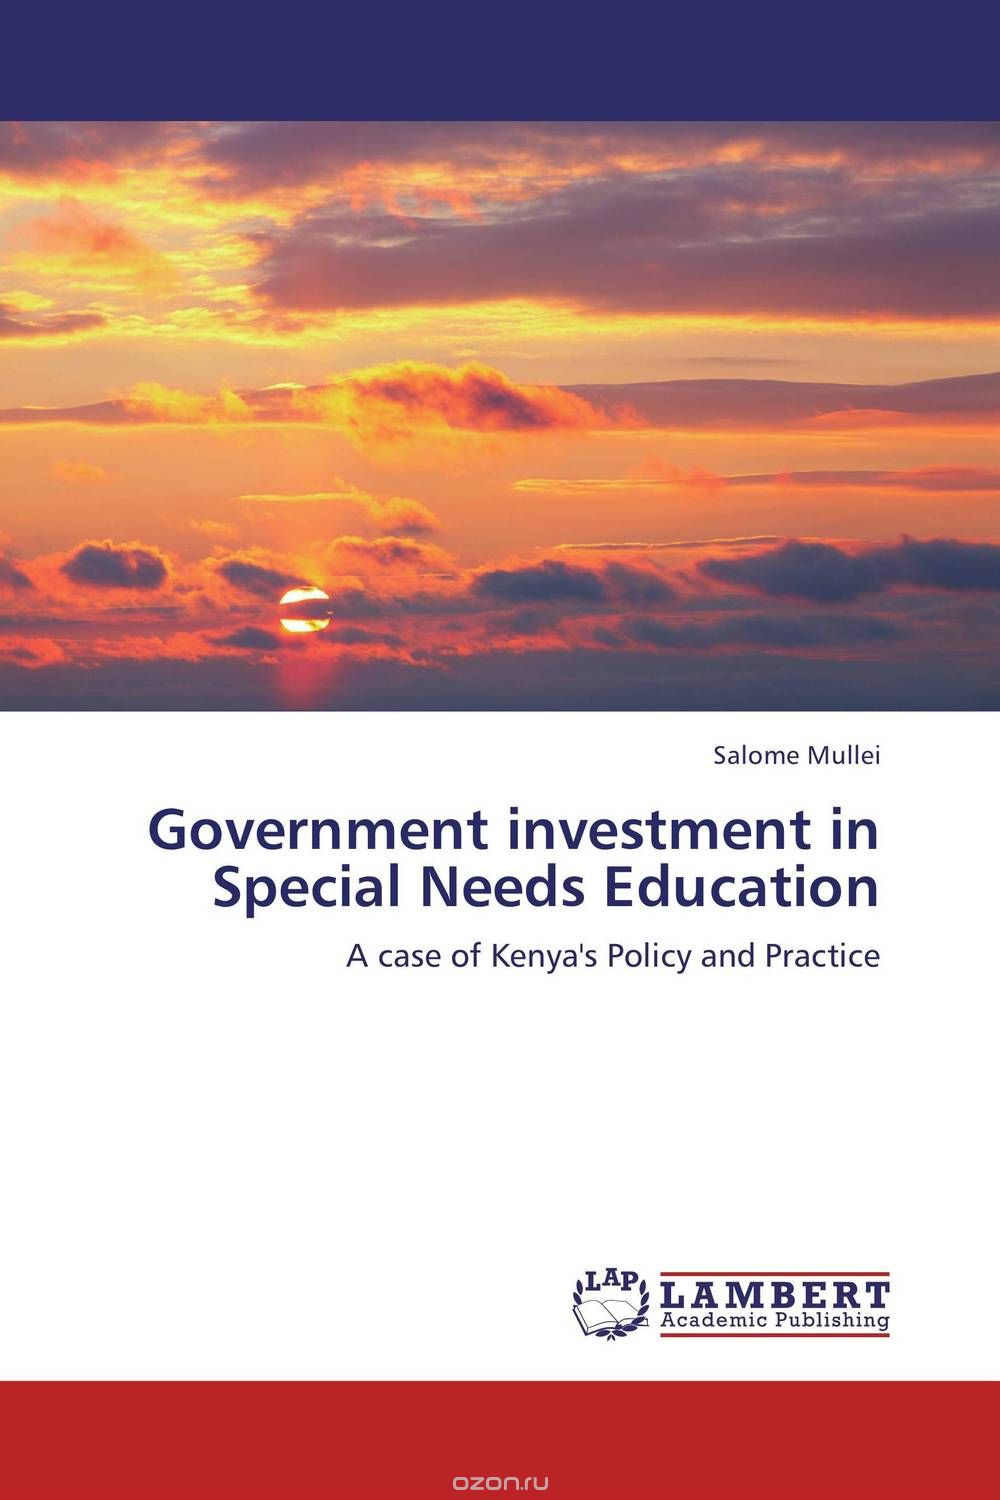 Скачать книгу "Government investment in Special Needs Education"